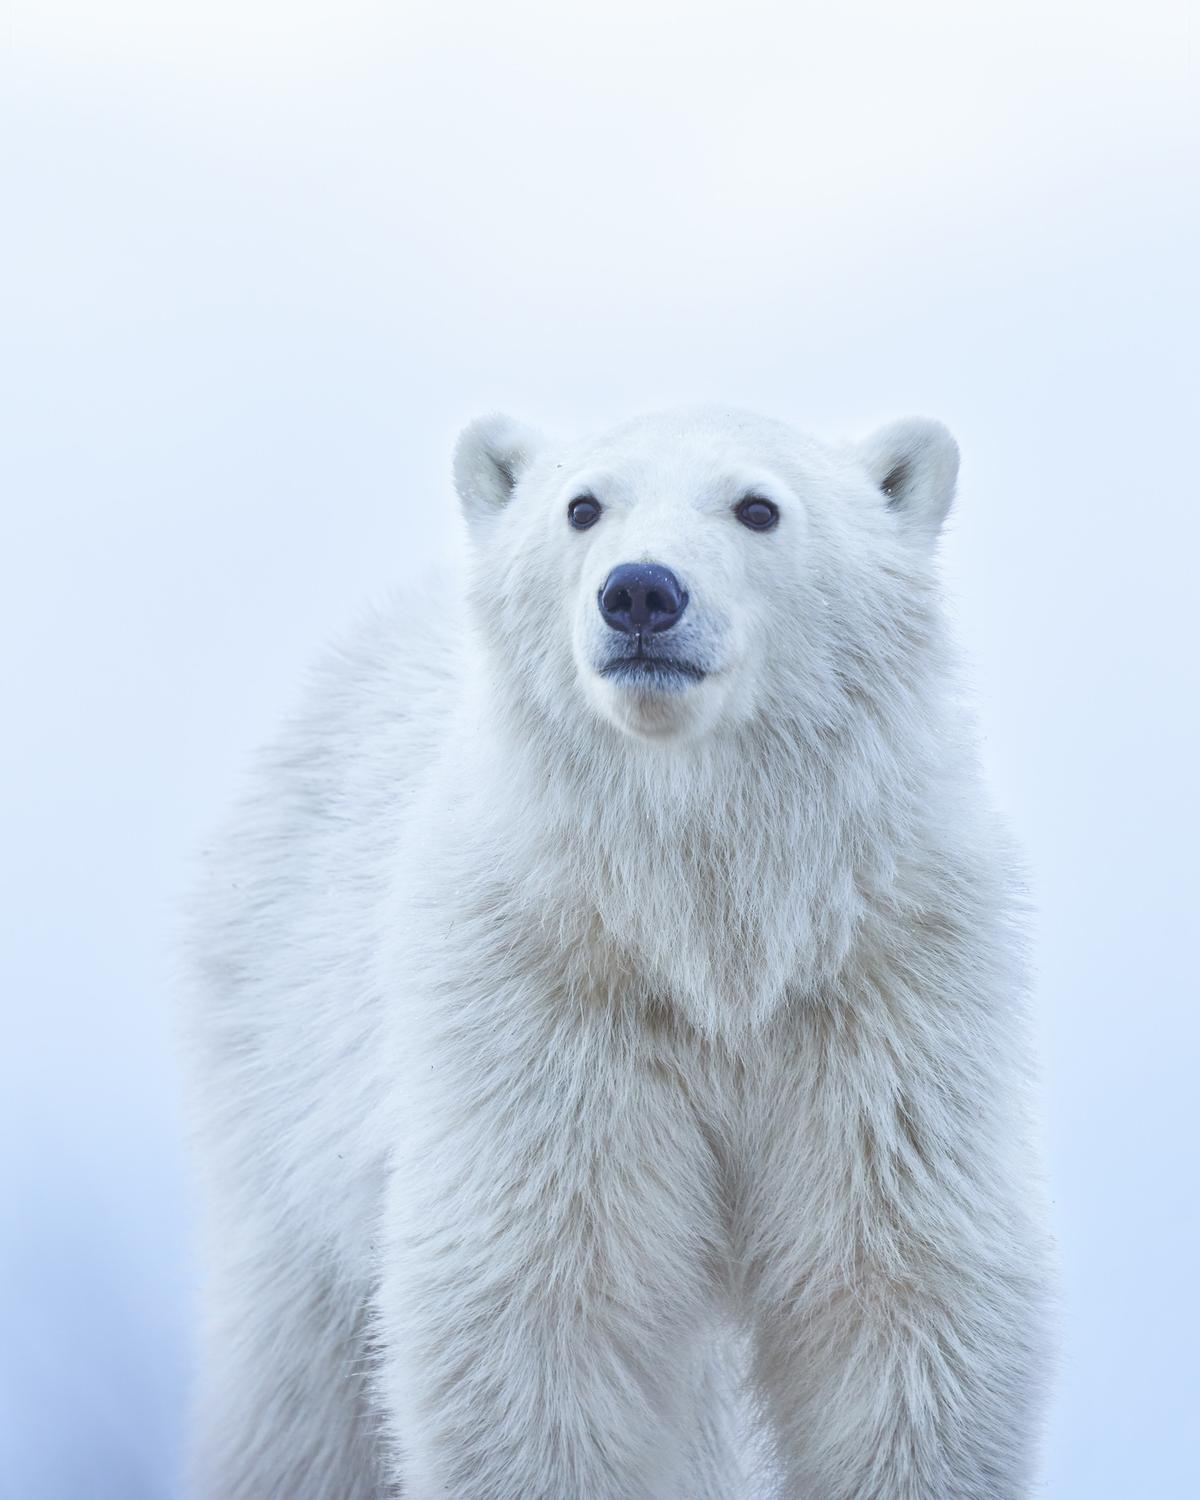 "Polar Bear Cub" by Jenny Zhao, United States of America; "A polar bear cub staring wistfully into the distance, shot in Canada in November 2021." (© Jenny Zhao, United States of America, Winner, National Awards, Natural World & Wildlife, 2022 Sony World Photography Awards)